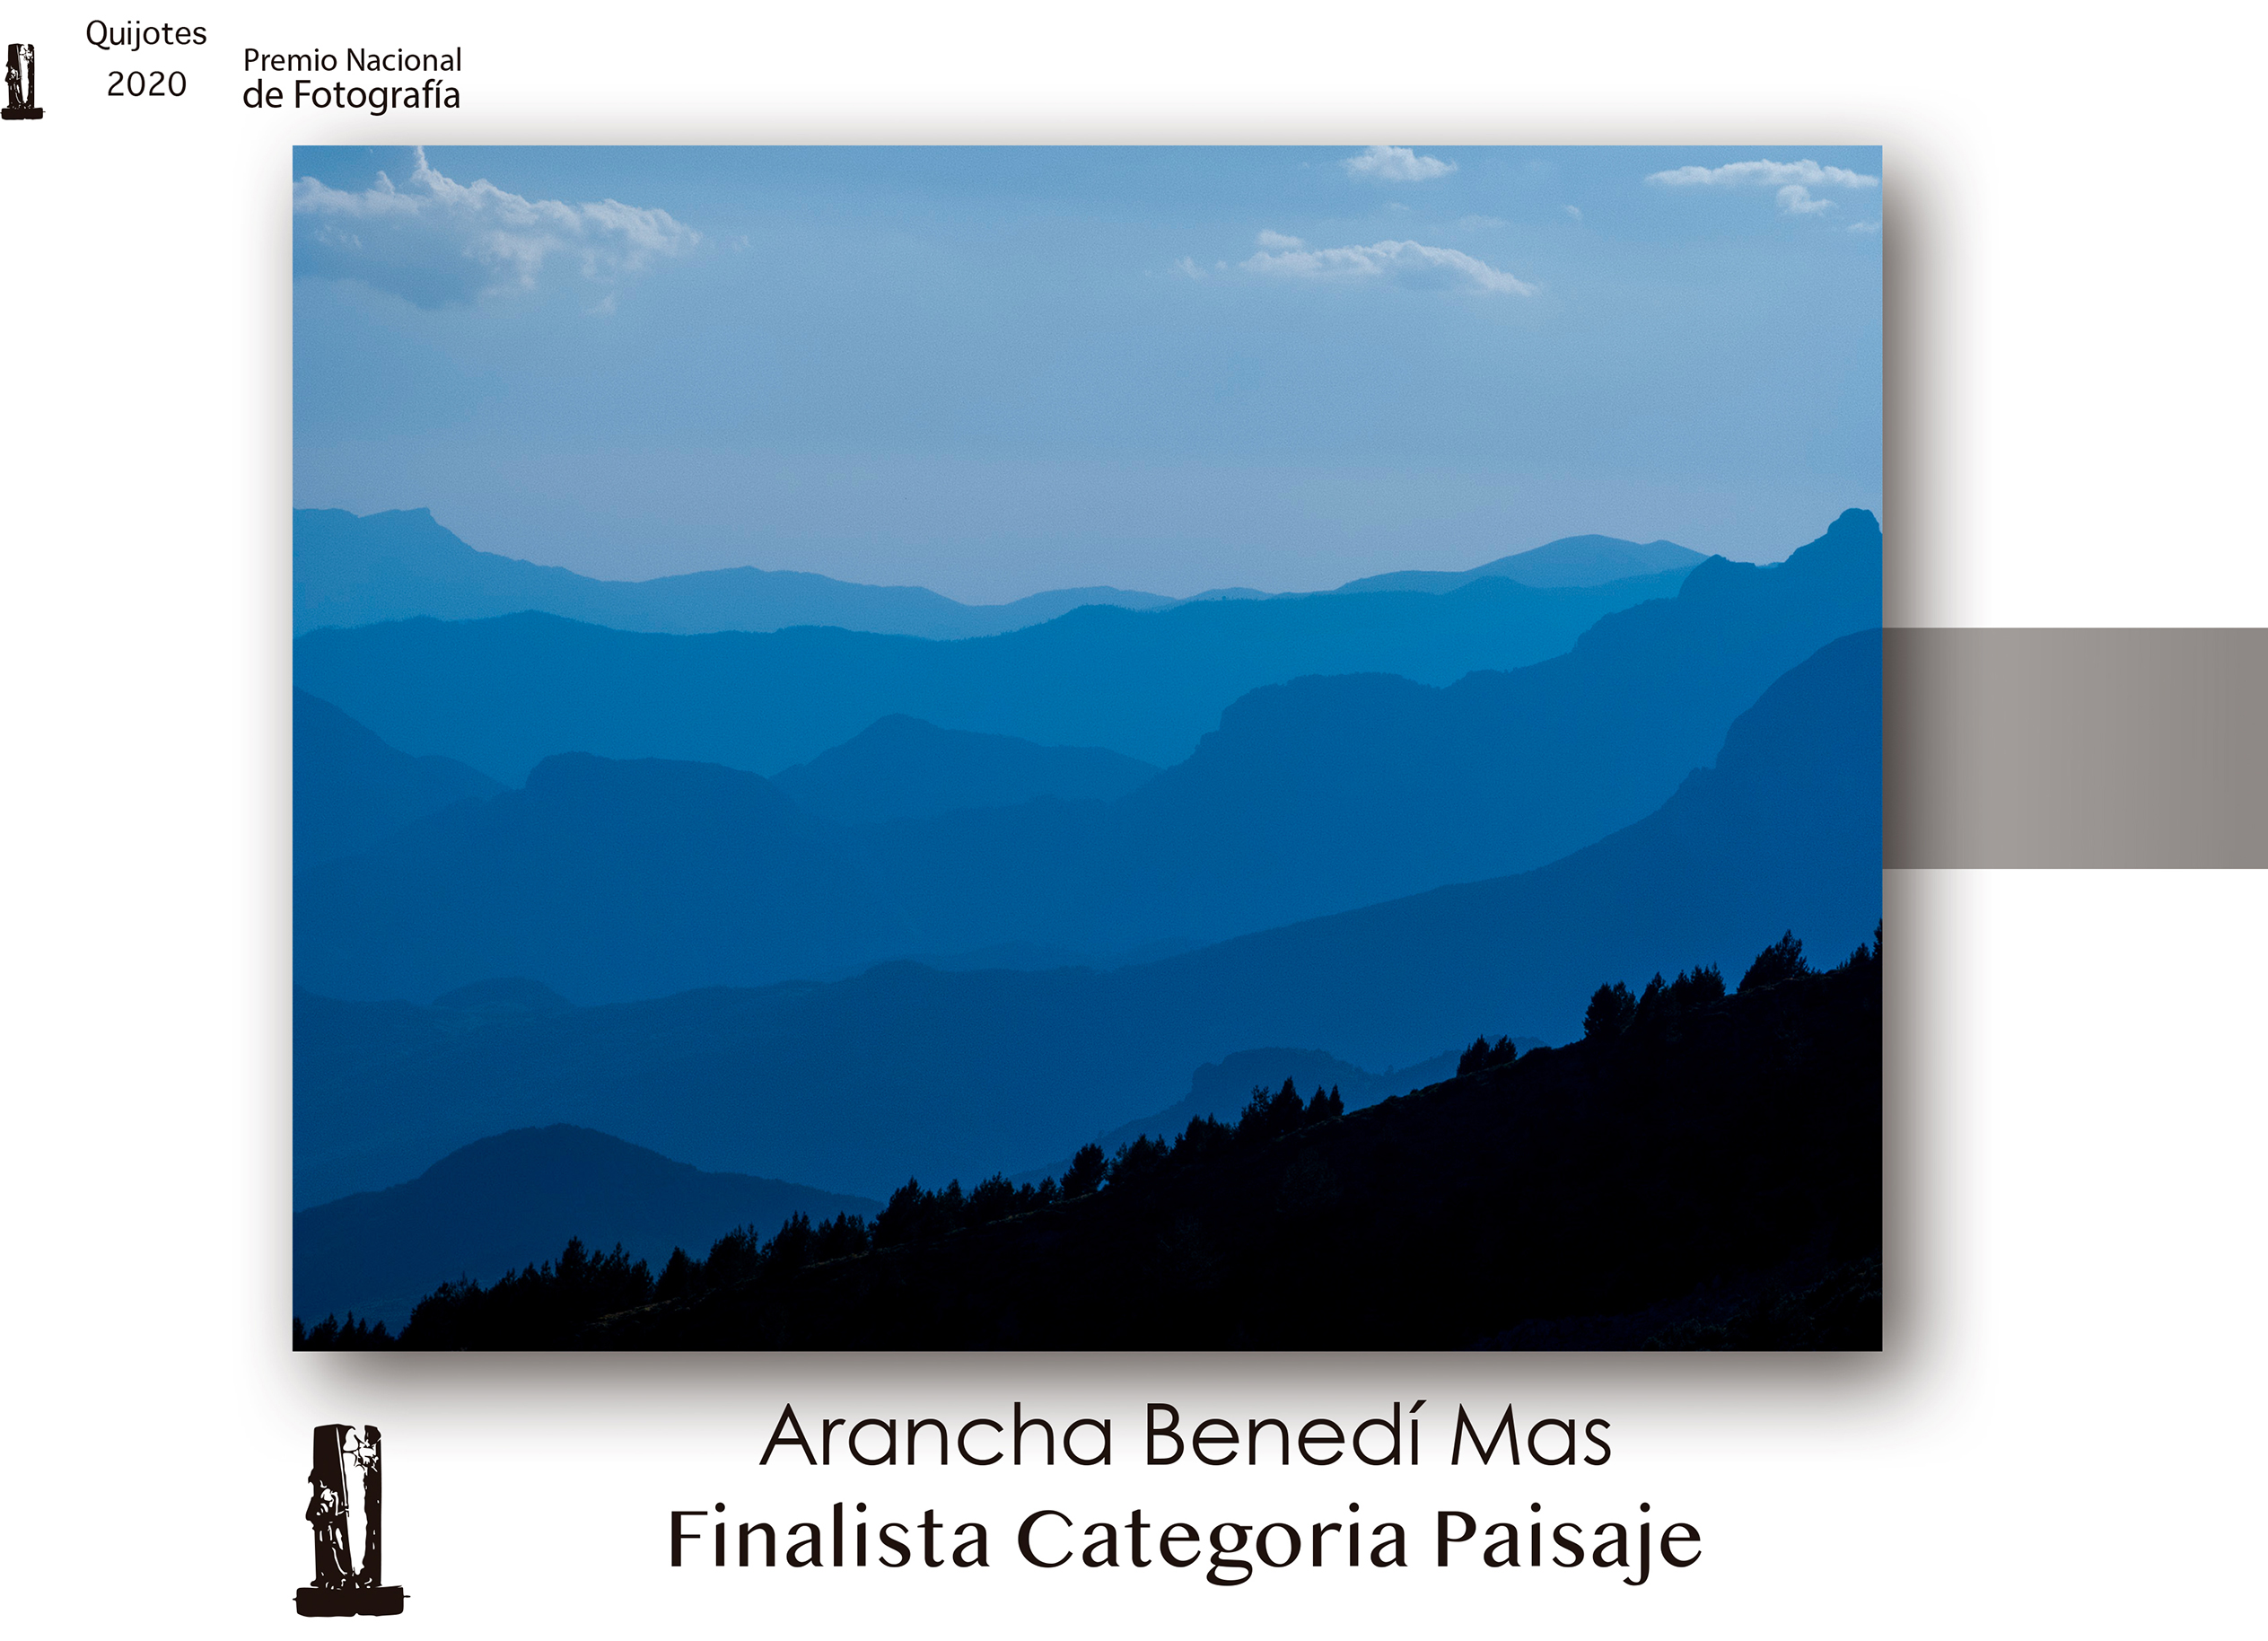 1º Premio Categoría Paisaje - Arancha Benedí Mas